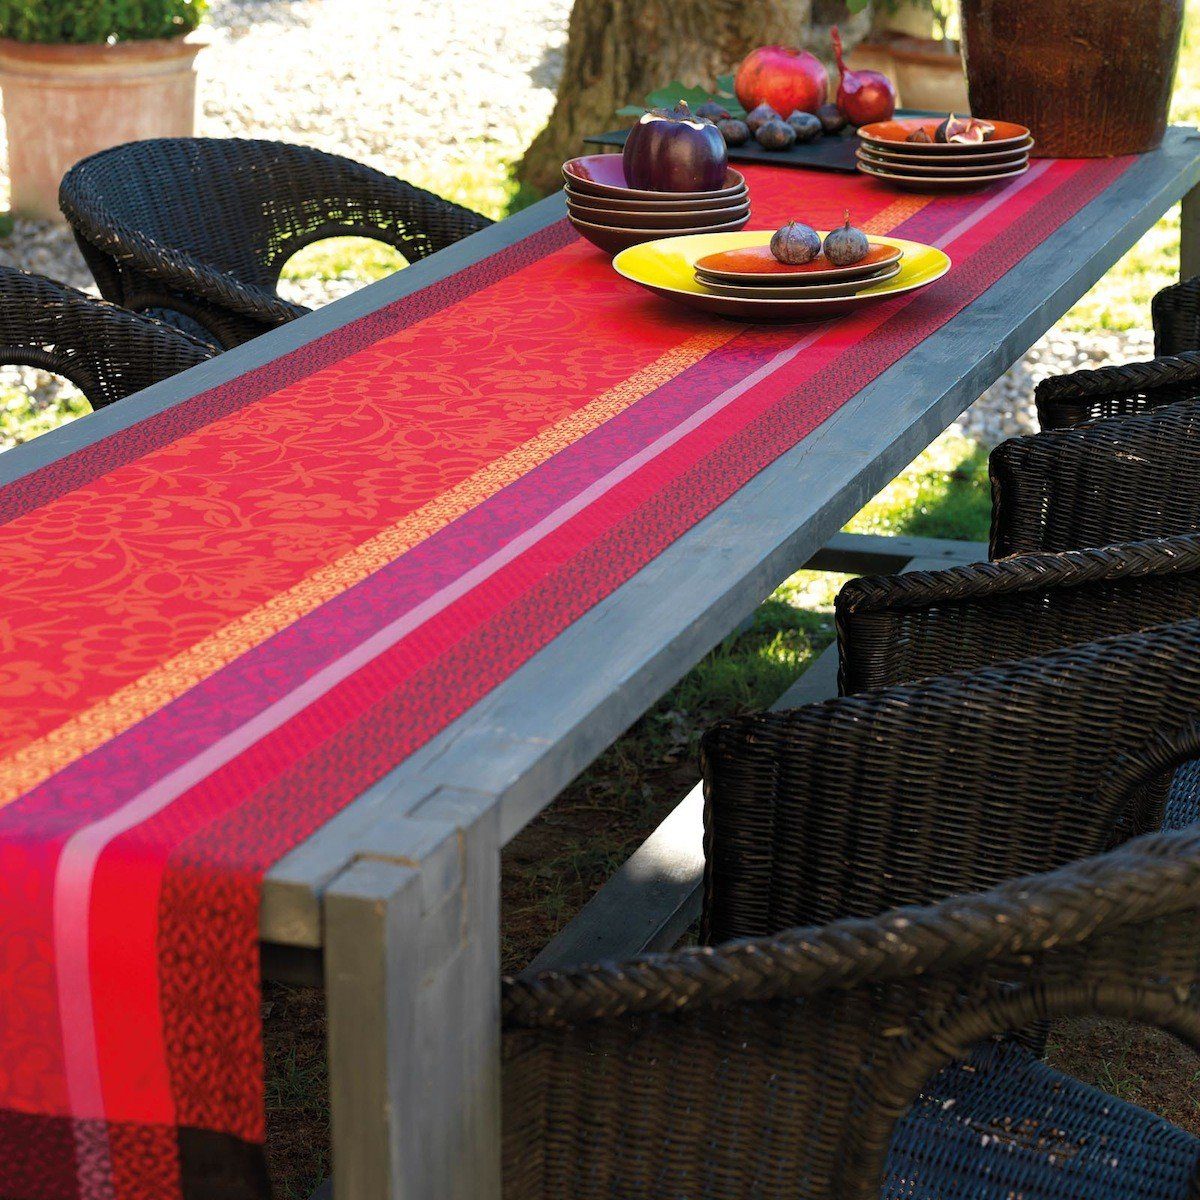 Le Jacquard Francais Tischläufer Tischläufer Provence Gariguette 55x150 cm, jacquard-gewebt